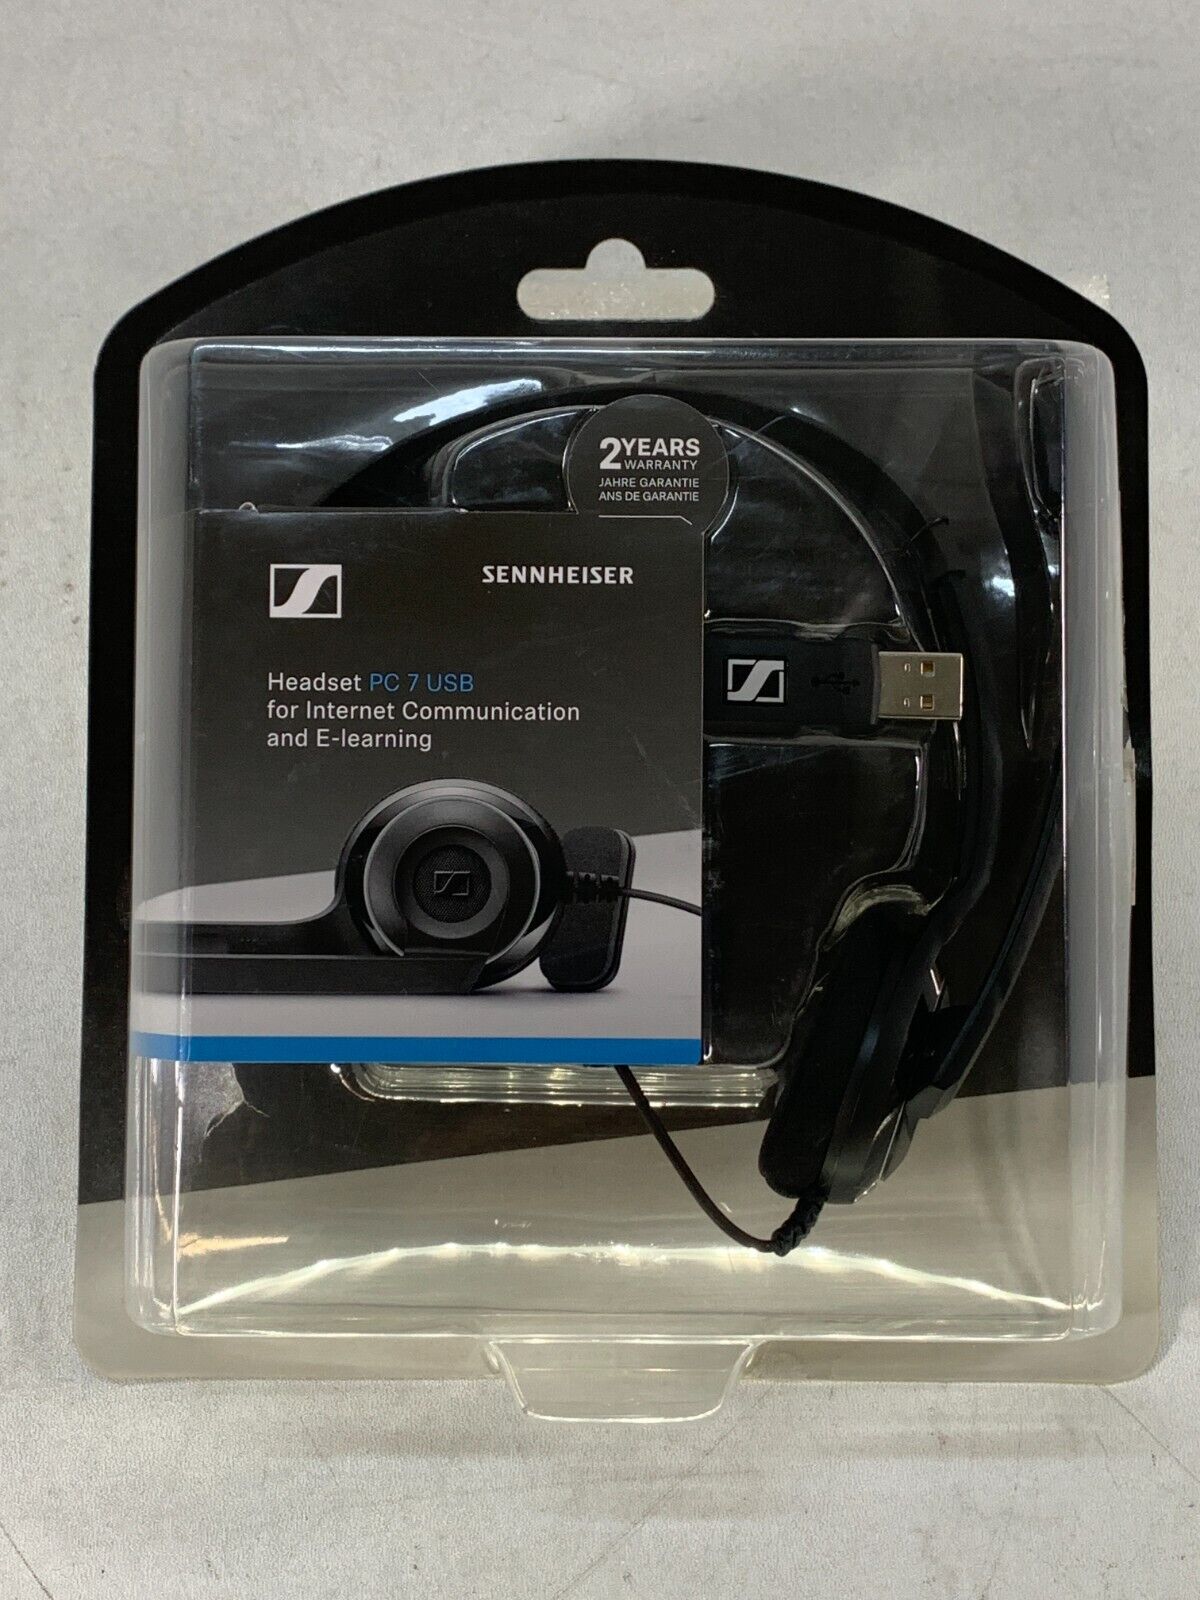 Sennheiser Consumer Audio PC 7 Sealed PC - New OregonRecycles MAC Headset - USB USB for and